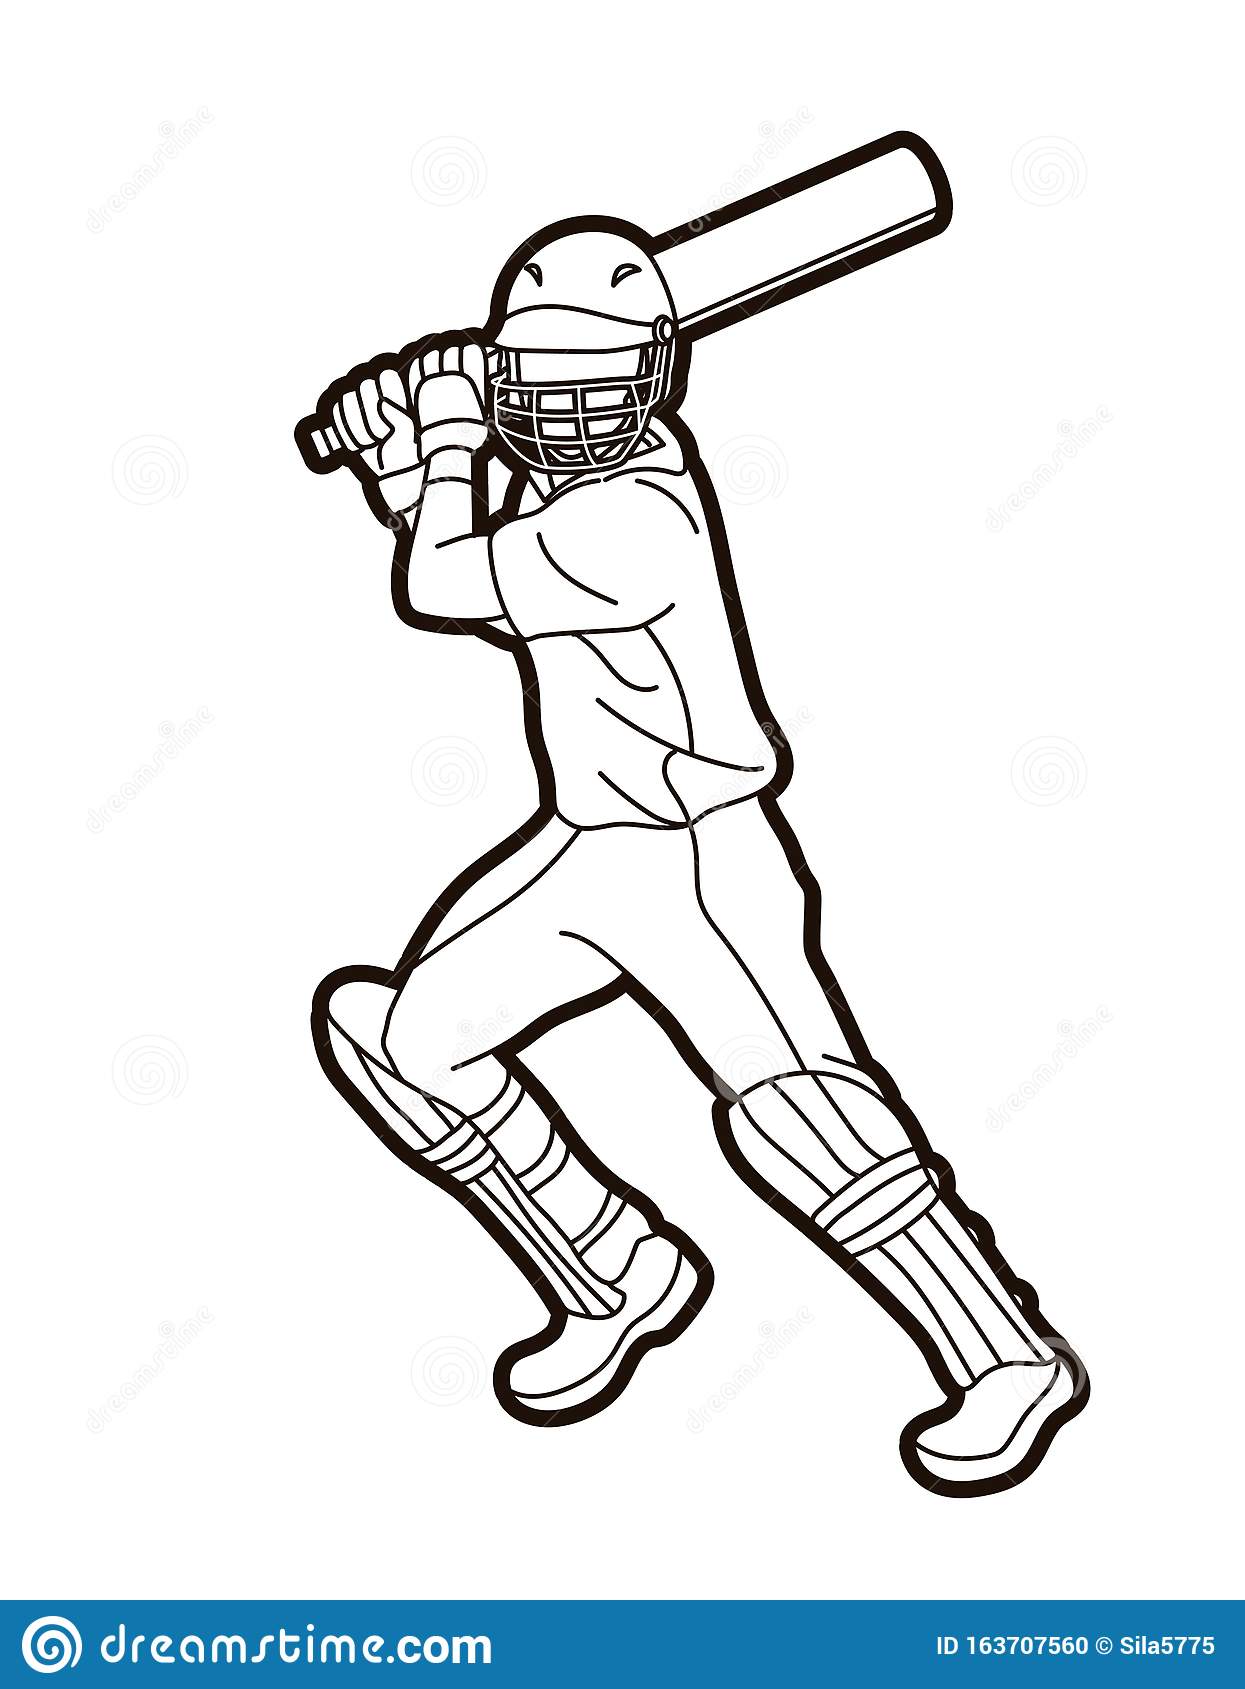 Cricket batsman sport player action cartoon graphic stock vector